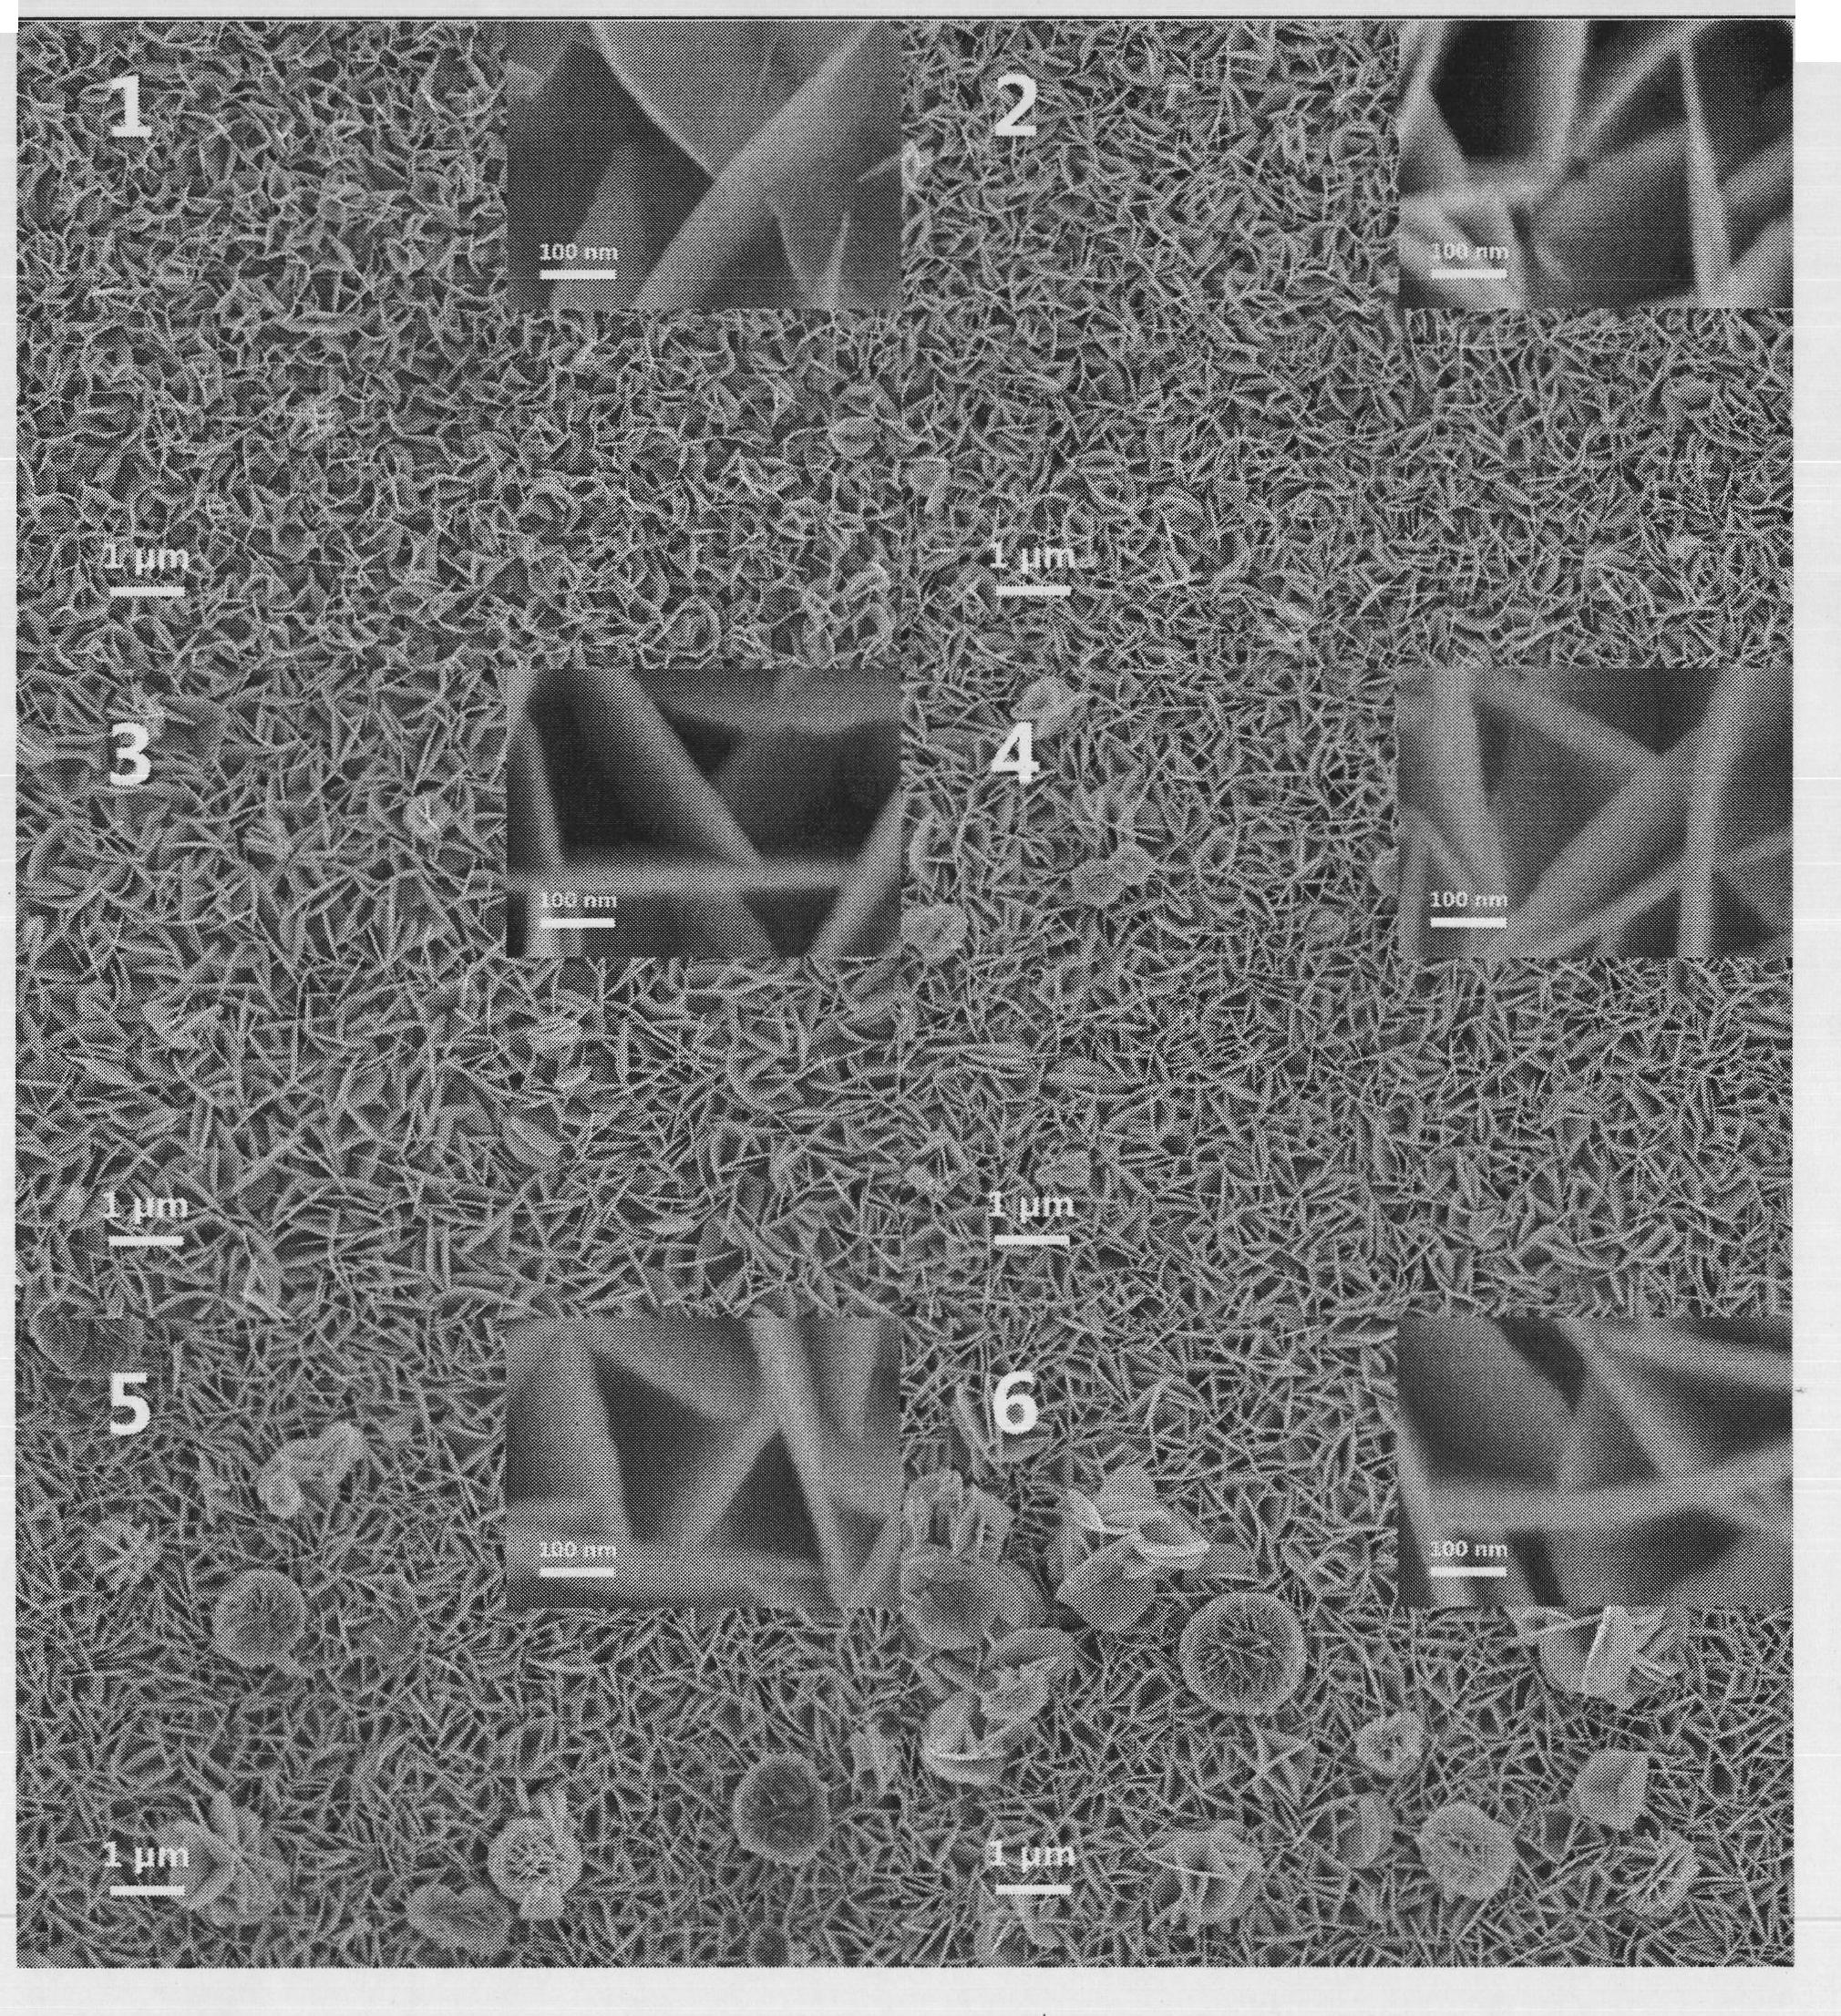 Method for preparing sheet-shaped bismuth oxyiodide (BiOI) nano-film electrode